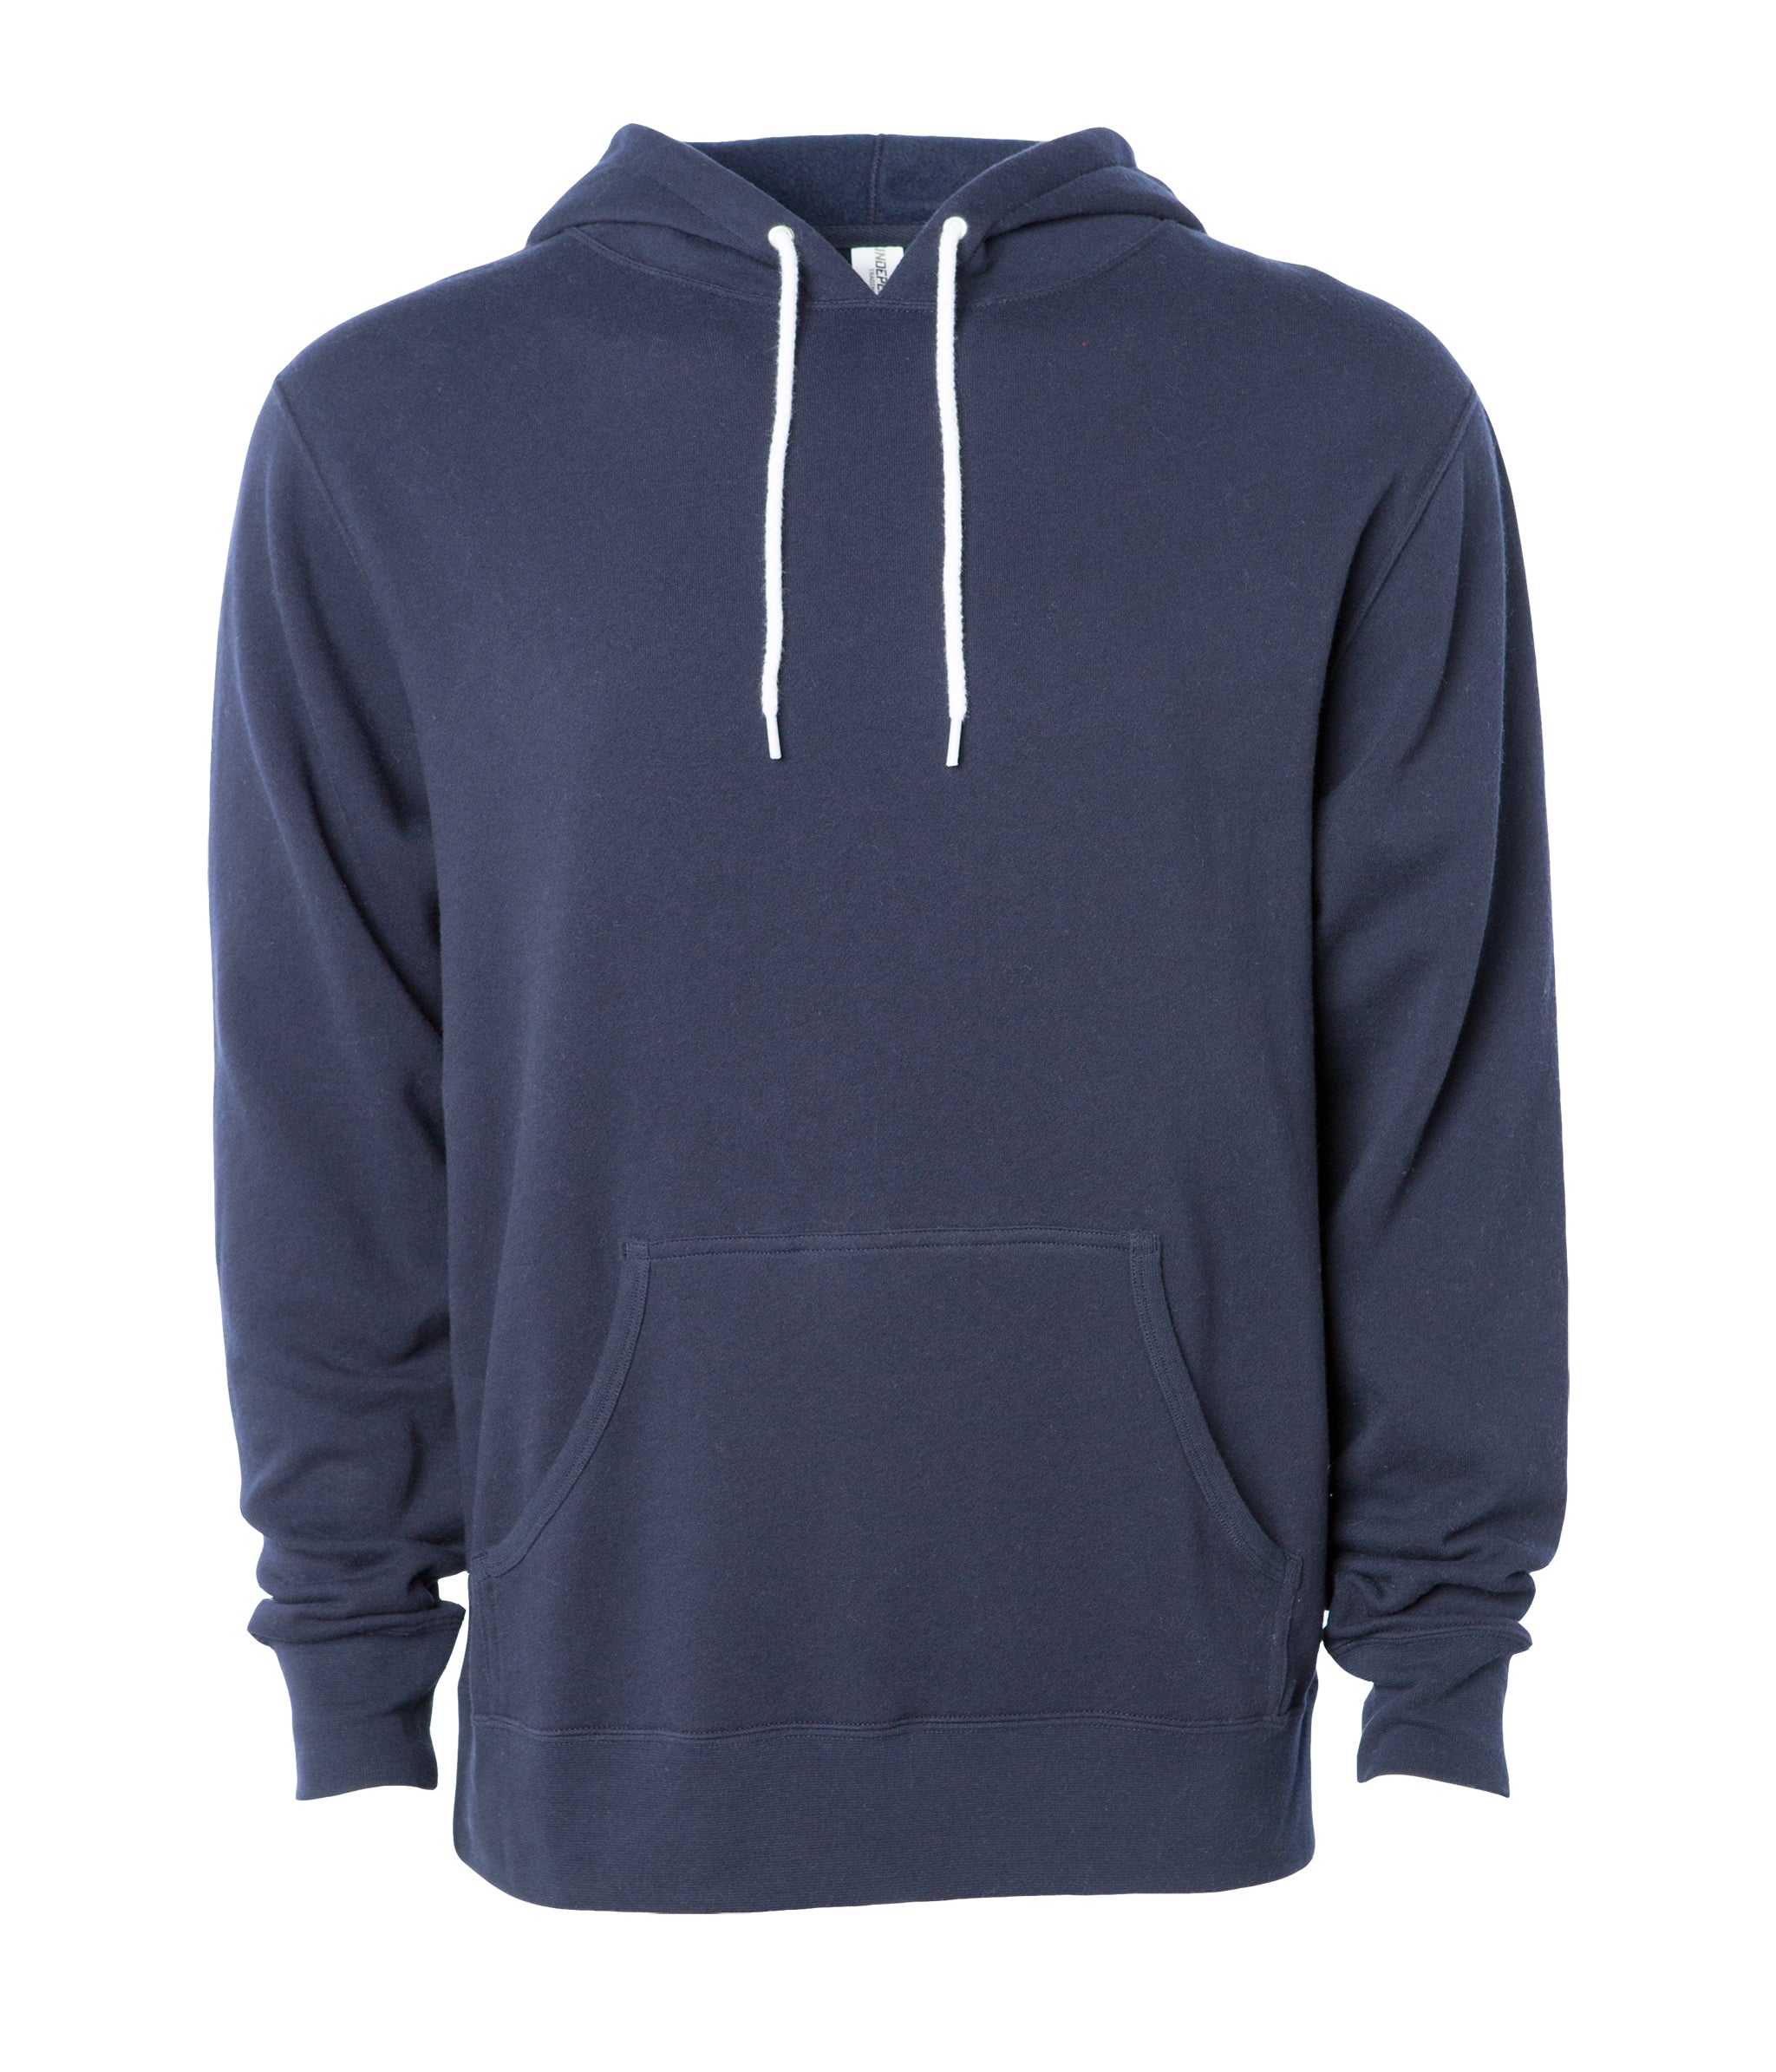 Unisex Contrasting Zip Hooded Sweatshirt | Independent Trading Company